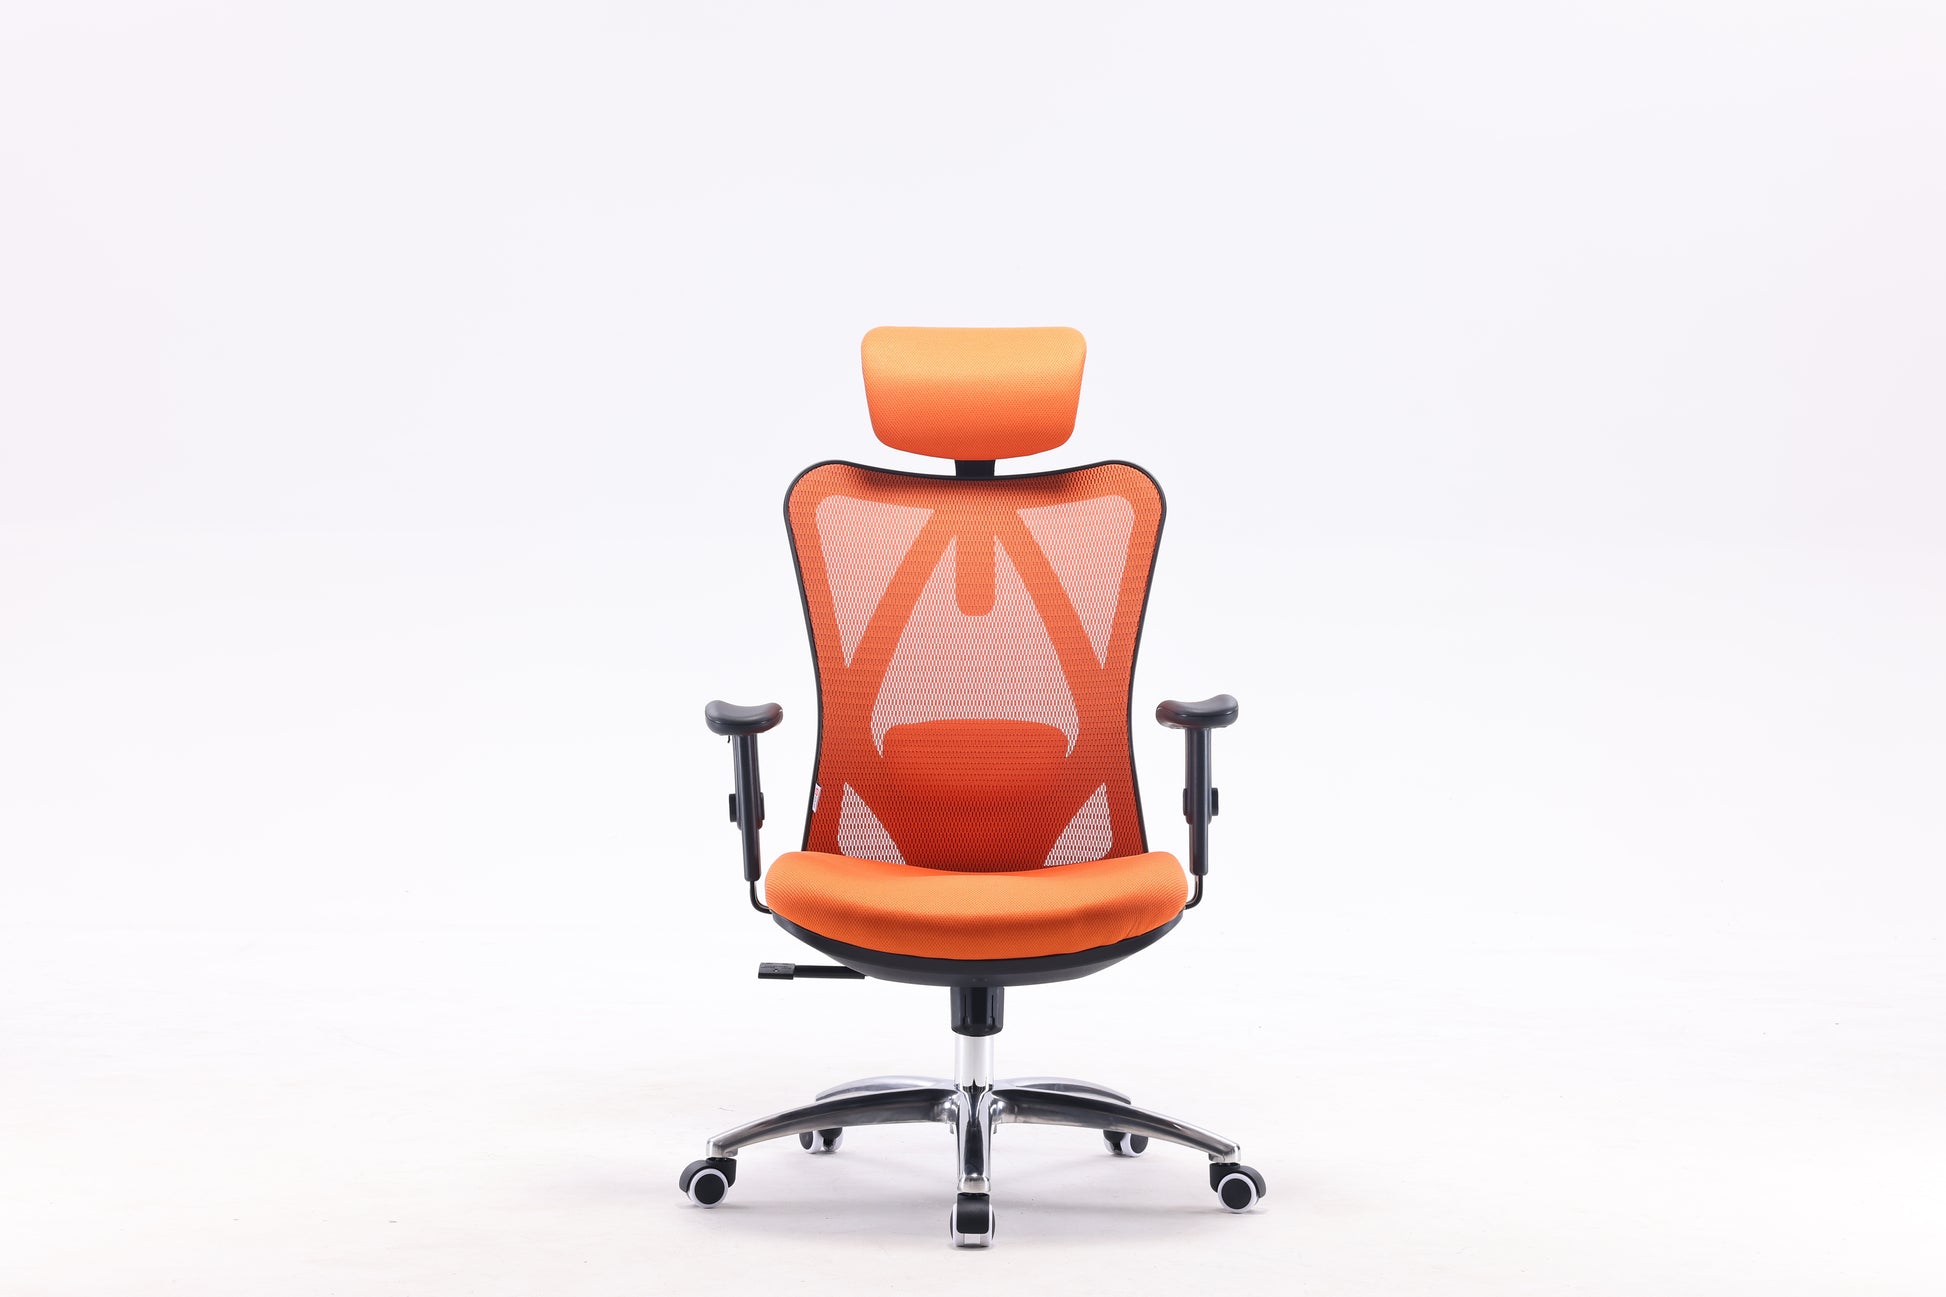 Sihoo M18 Ergonomic Office Chair review